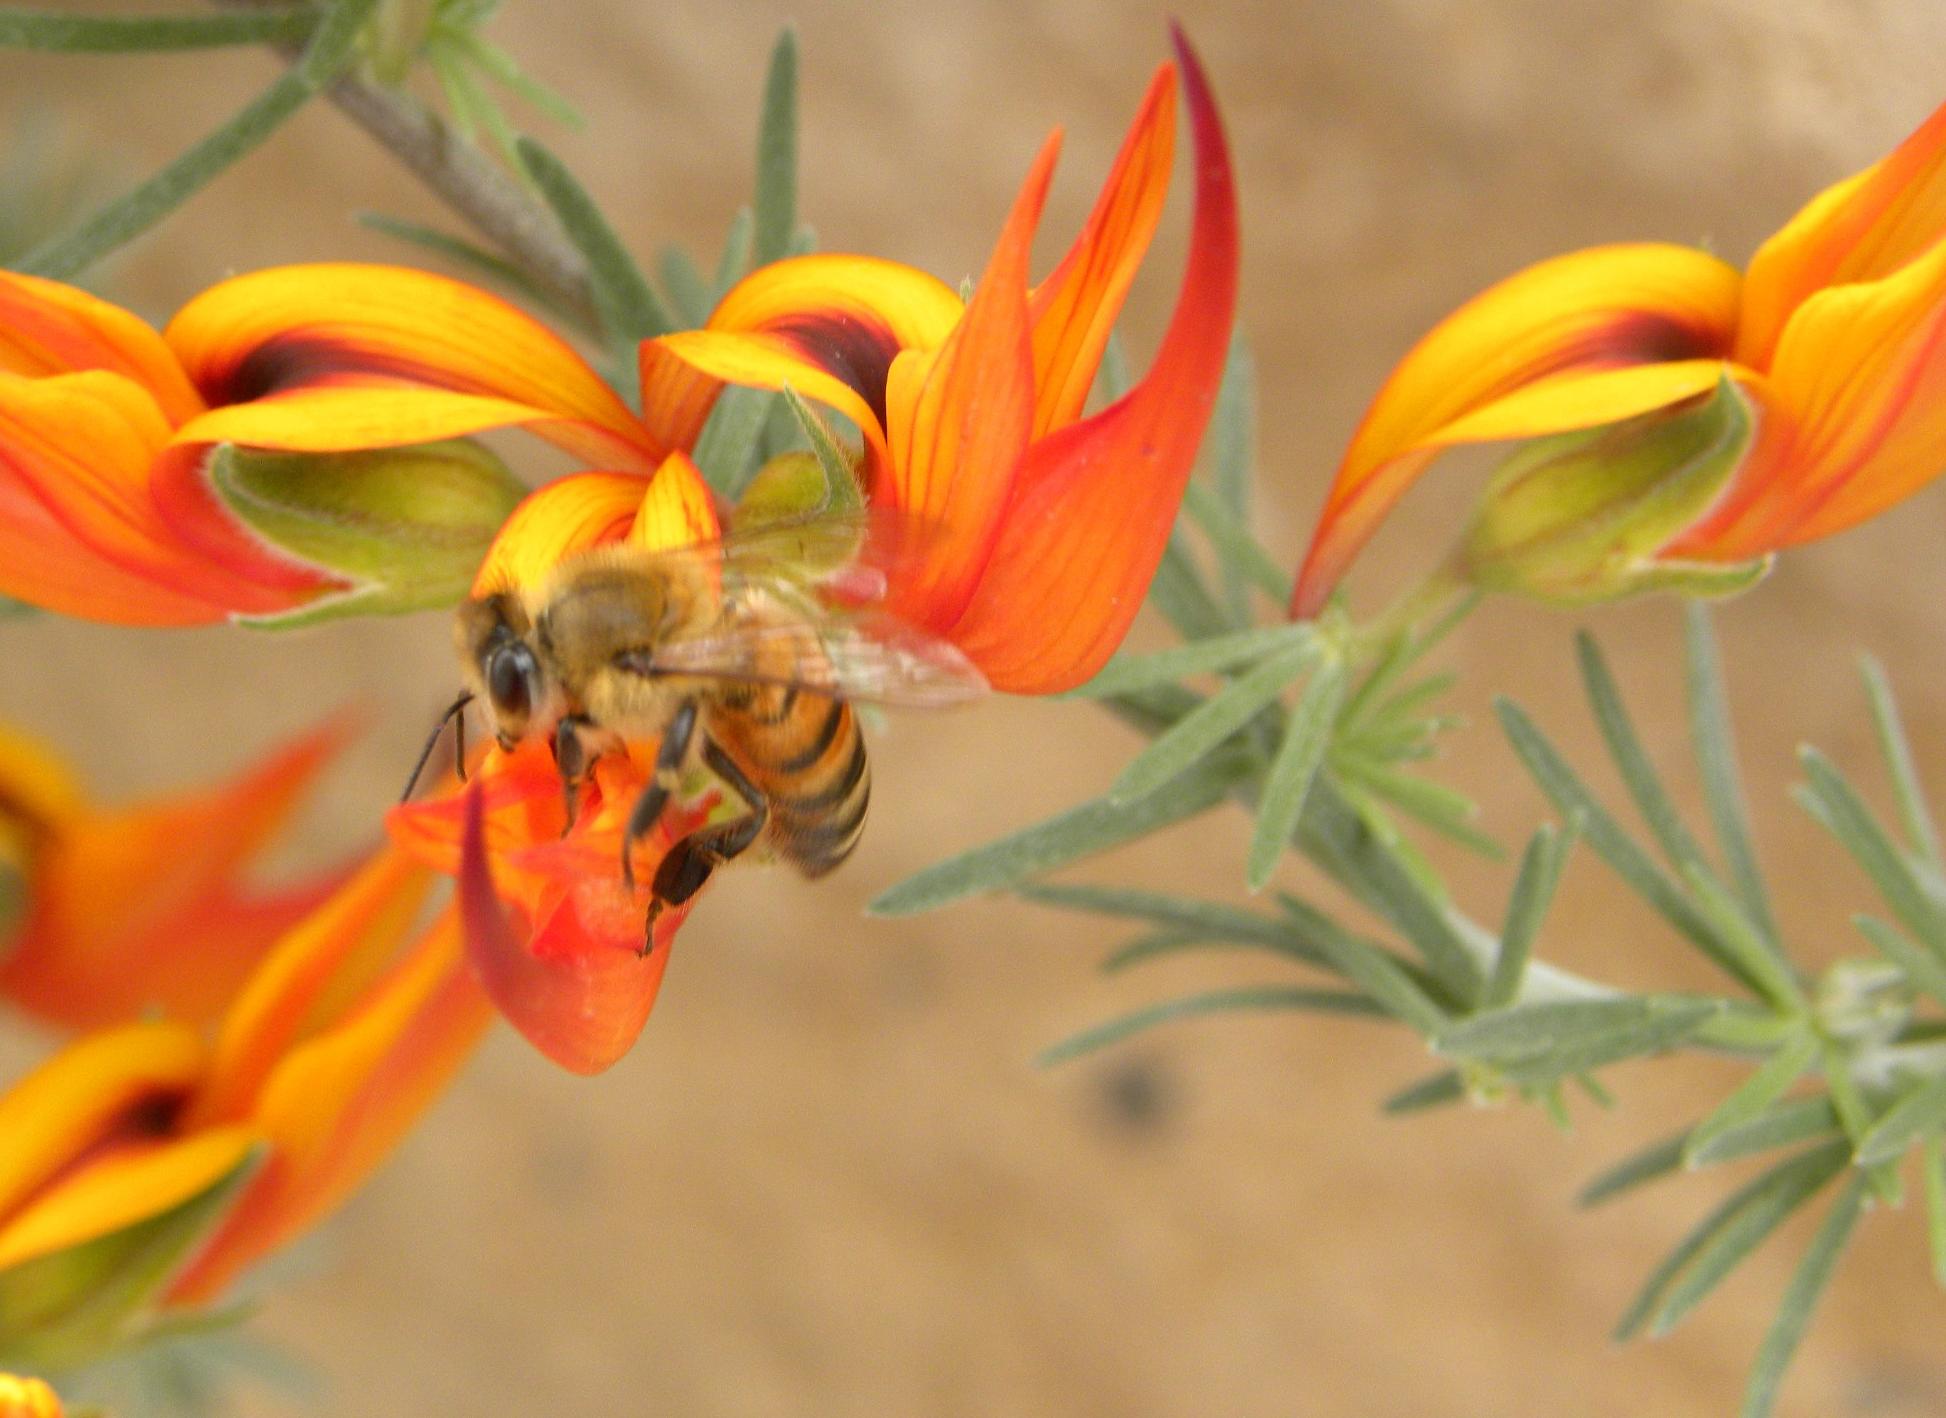 Photos by Christina Christodoulou Μέλισσες ένας πολύτιμος